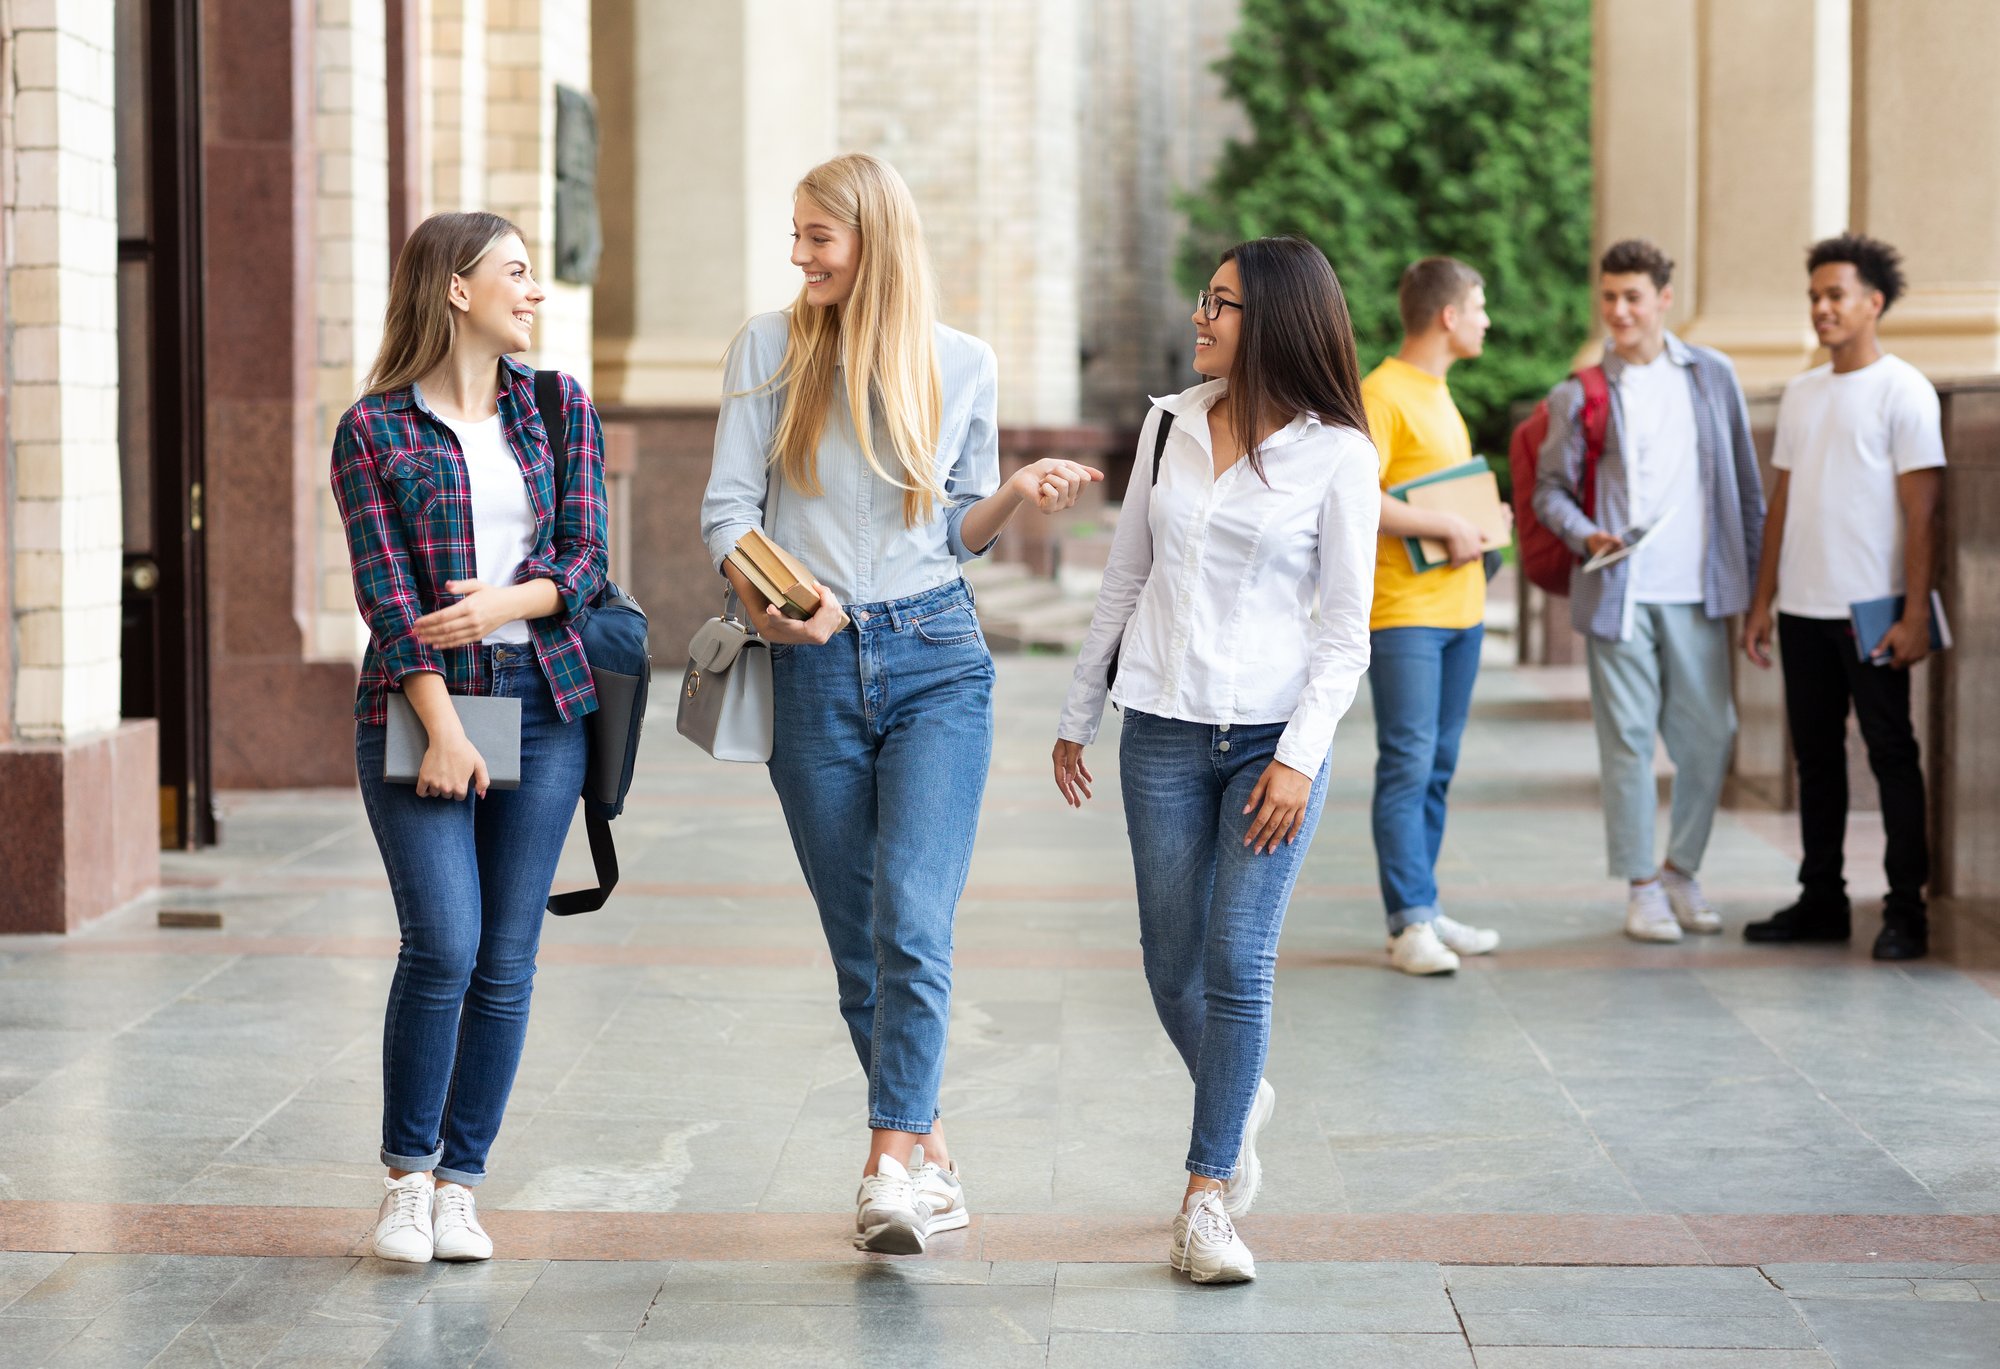 university-life-girls-walking-after-classes-outdoo-7GKMBVT